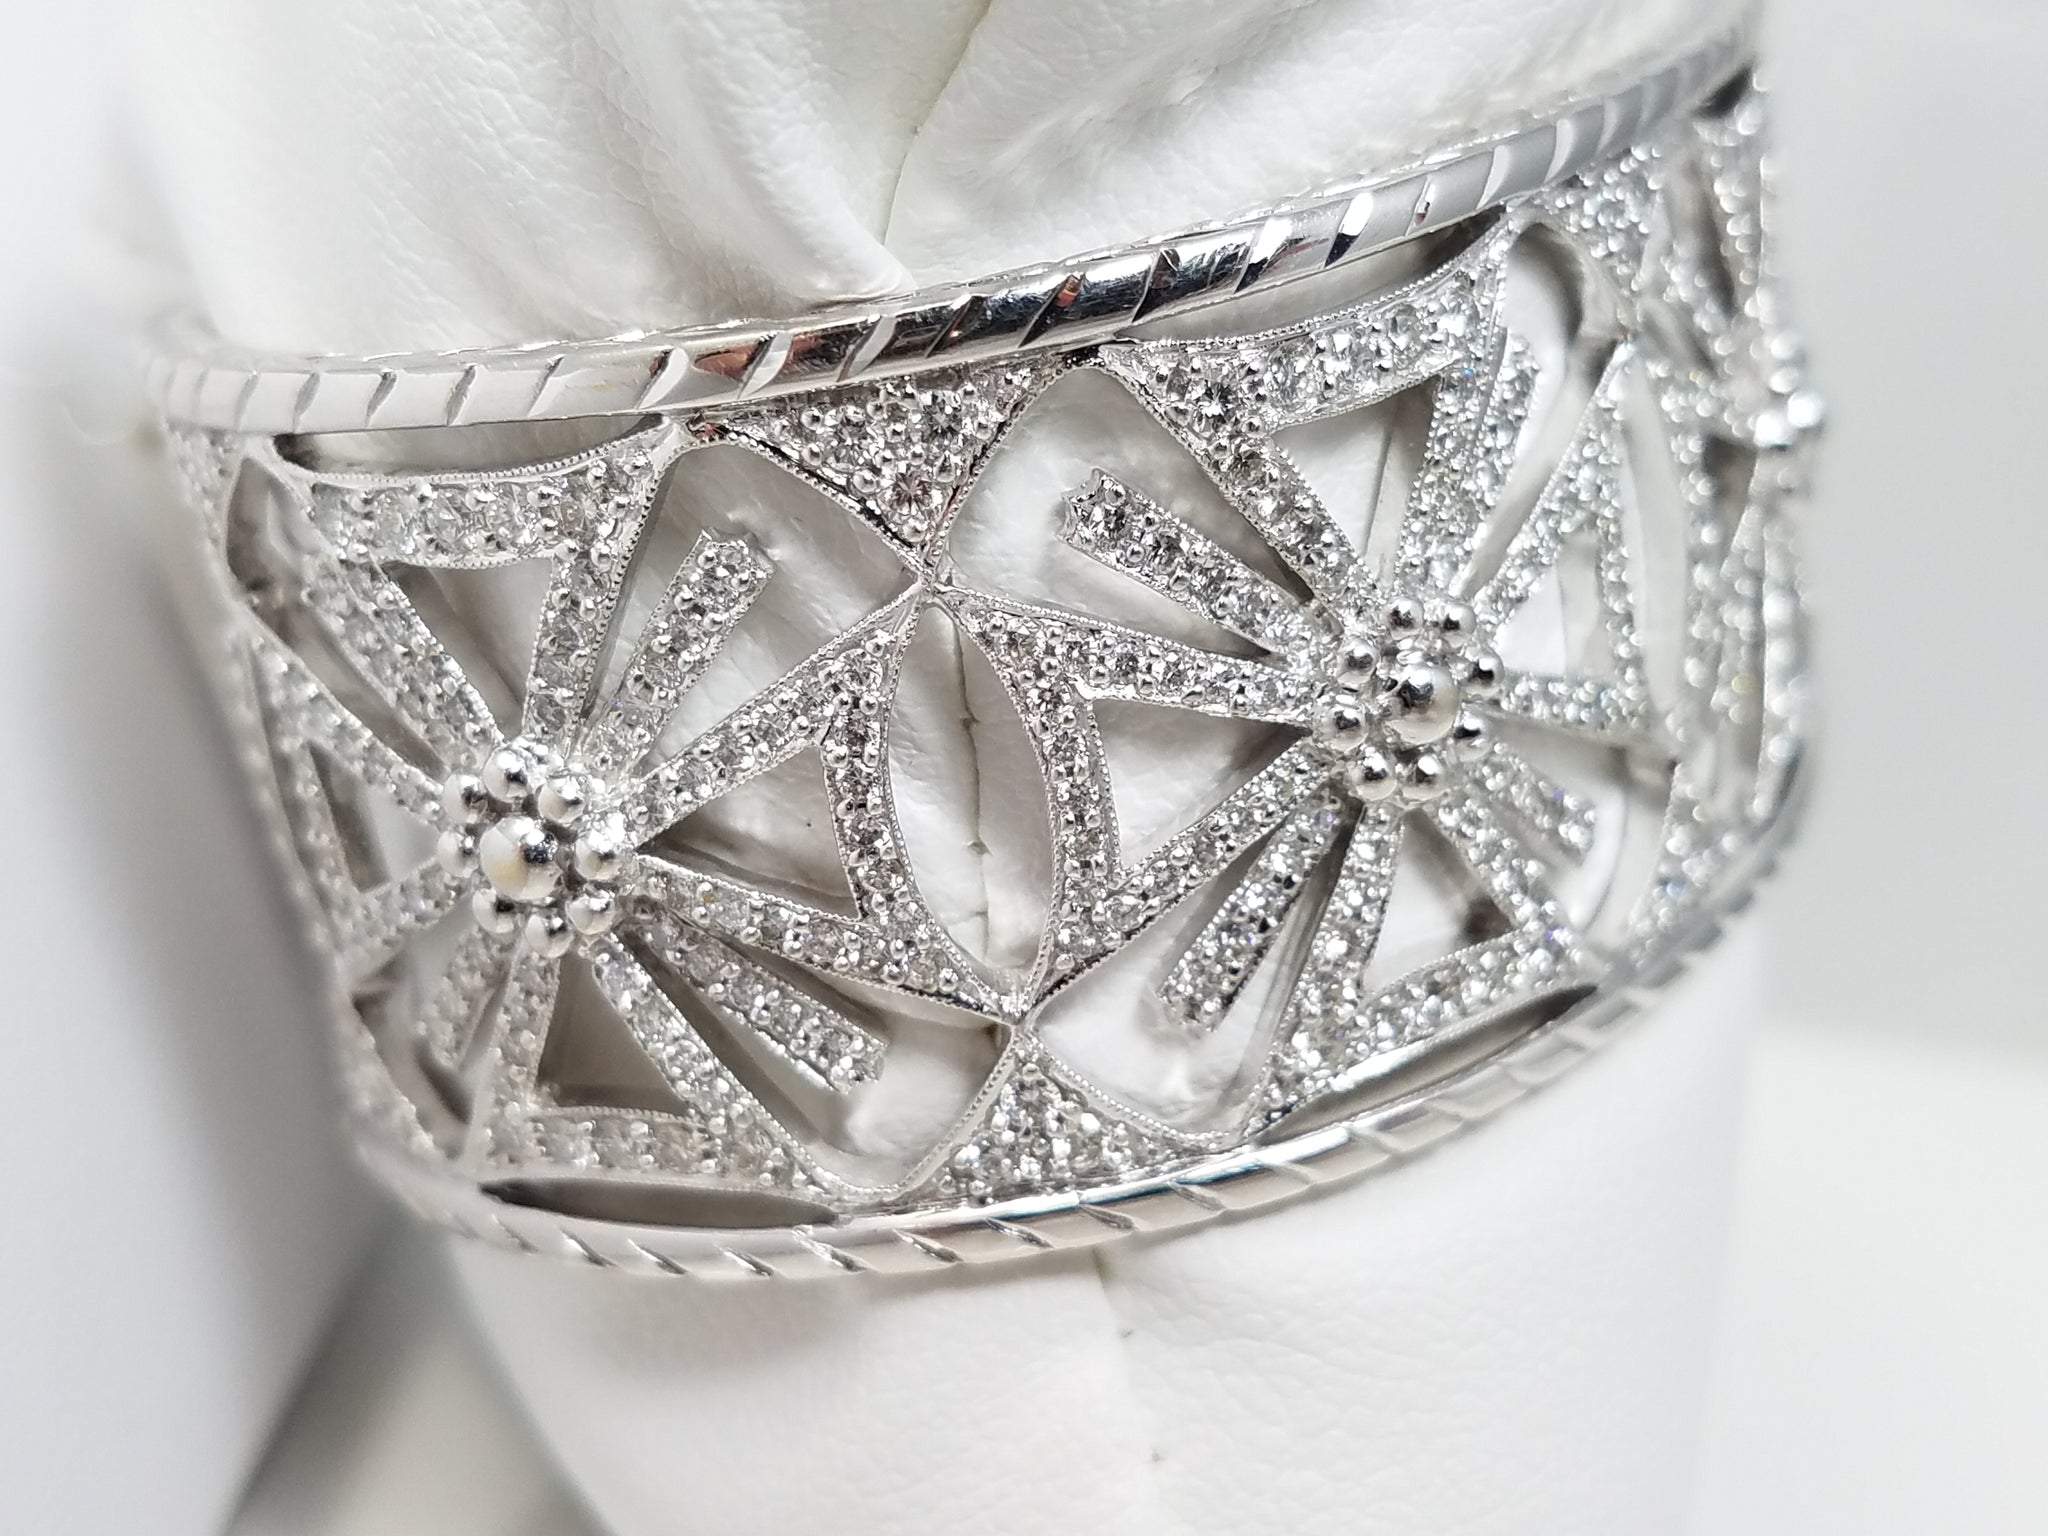 *$20,000 Retail! * Exquisite 5" Chad Allison 18k White Gold 4.25ctw Diamond Cuff Bangle Bracelet